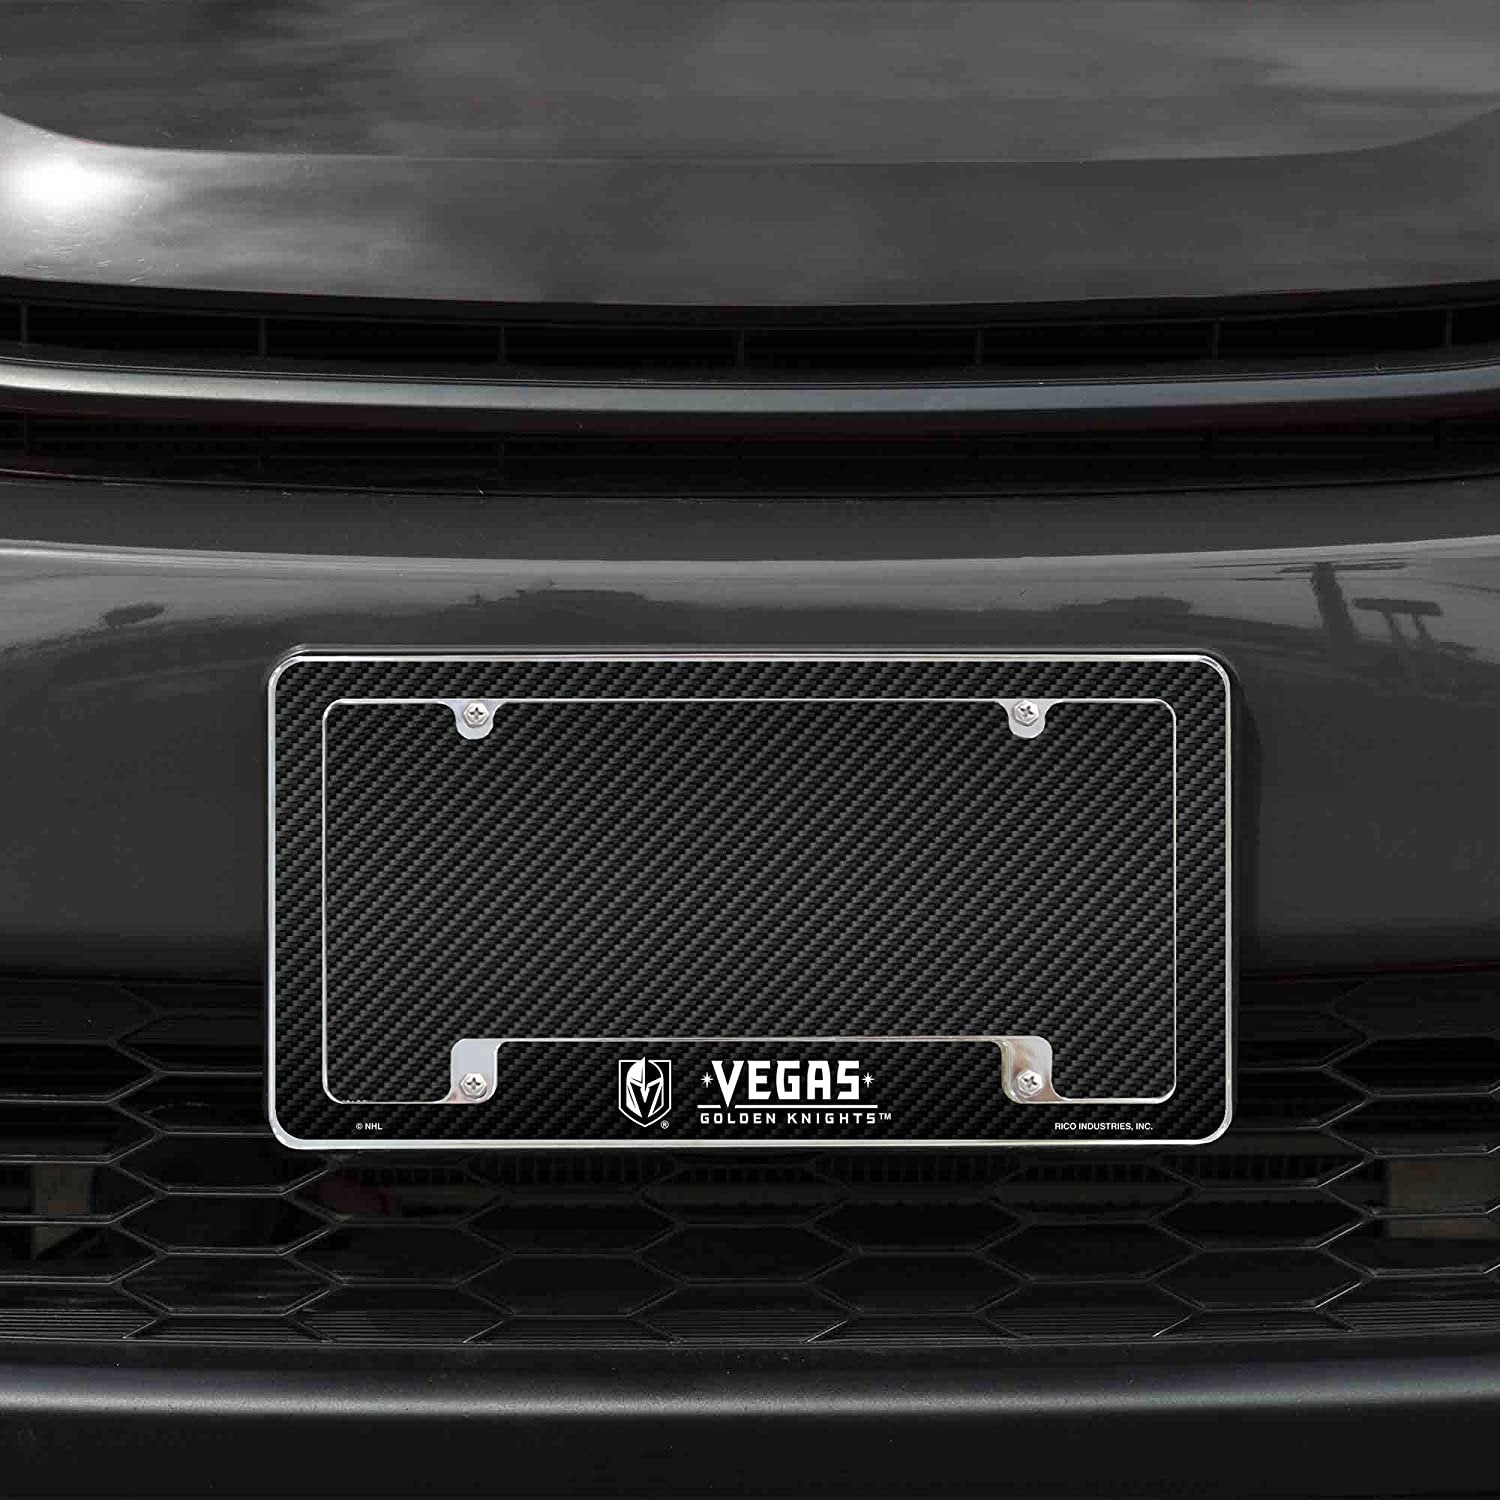 Vegas Golden Knights Metal License Plate Frame Tag Cover Carbon Fiber Design 12x6 Inch